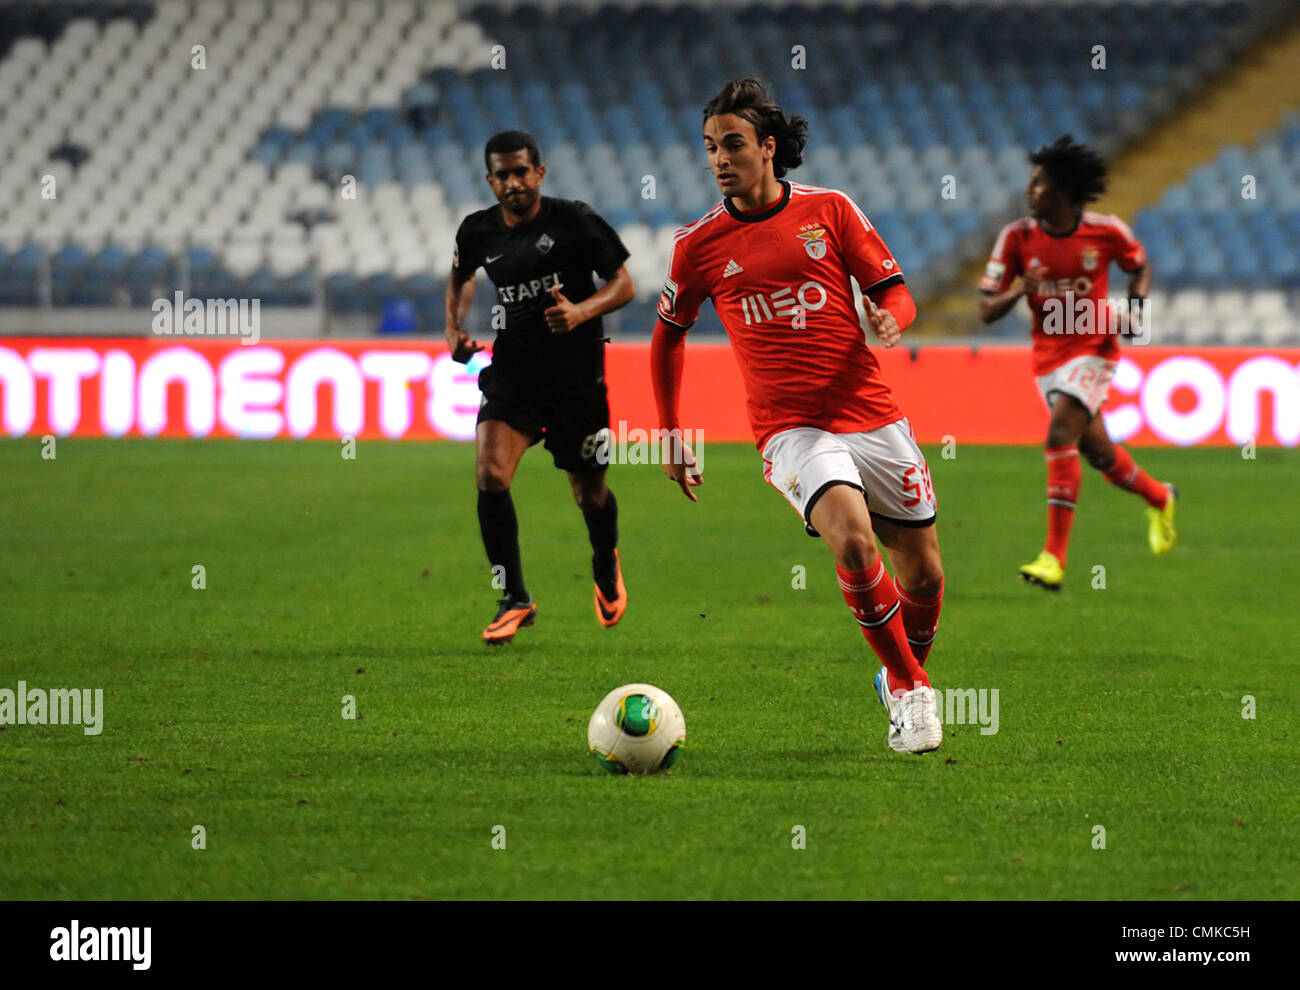 (Serbe Lazar Markovic de Benfica s'exécute avec le ballon au cours de la Liga Zon Sagres portugaise match de football entre Academica et Benfica Banque D'Images